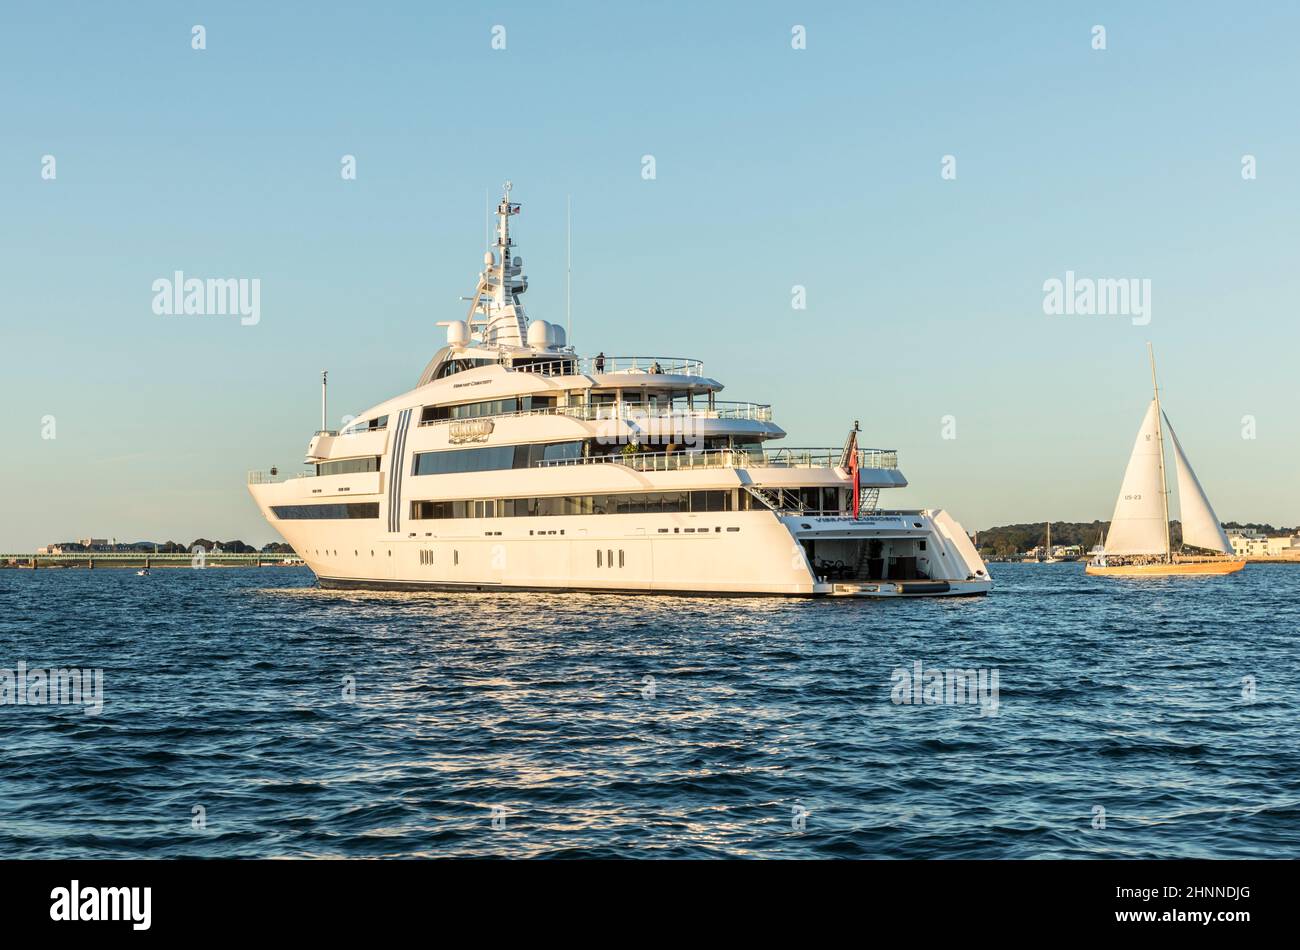 motor yacht vibrant curiosity of the german owner reinhold wuert in Newport, USA Stock Photo